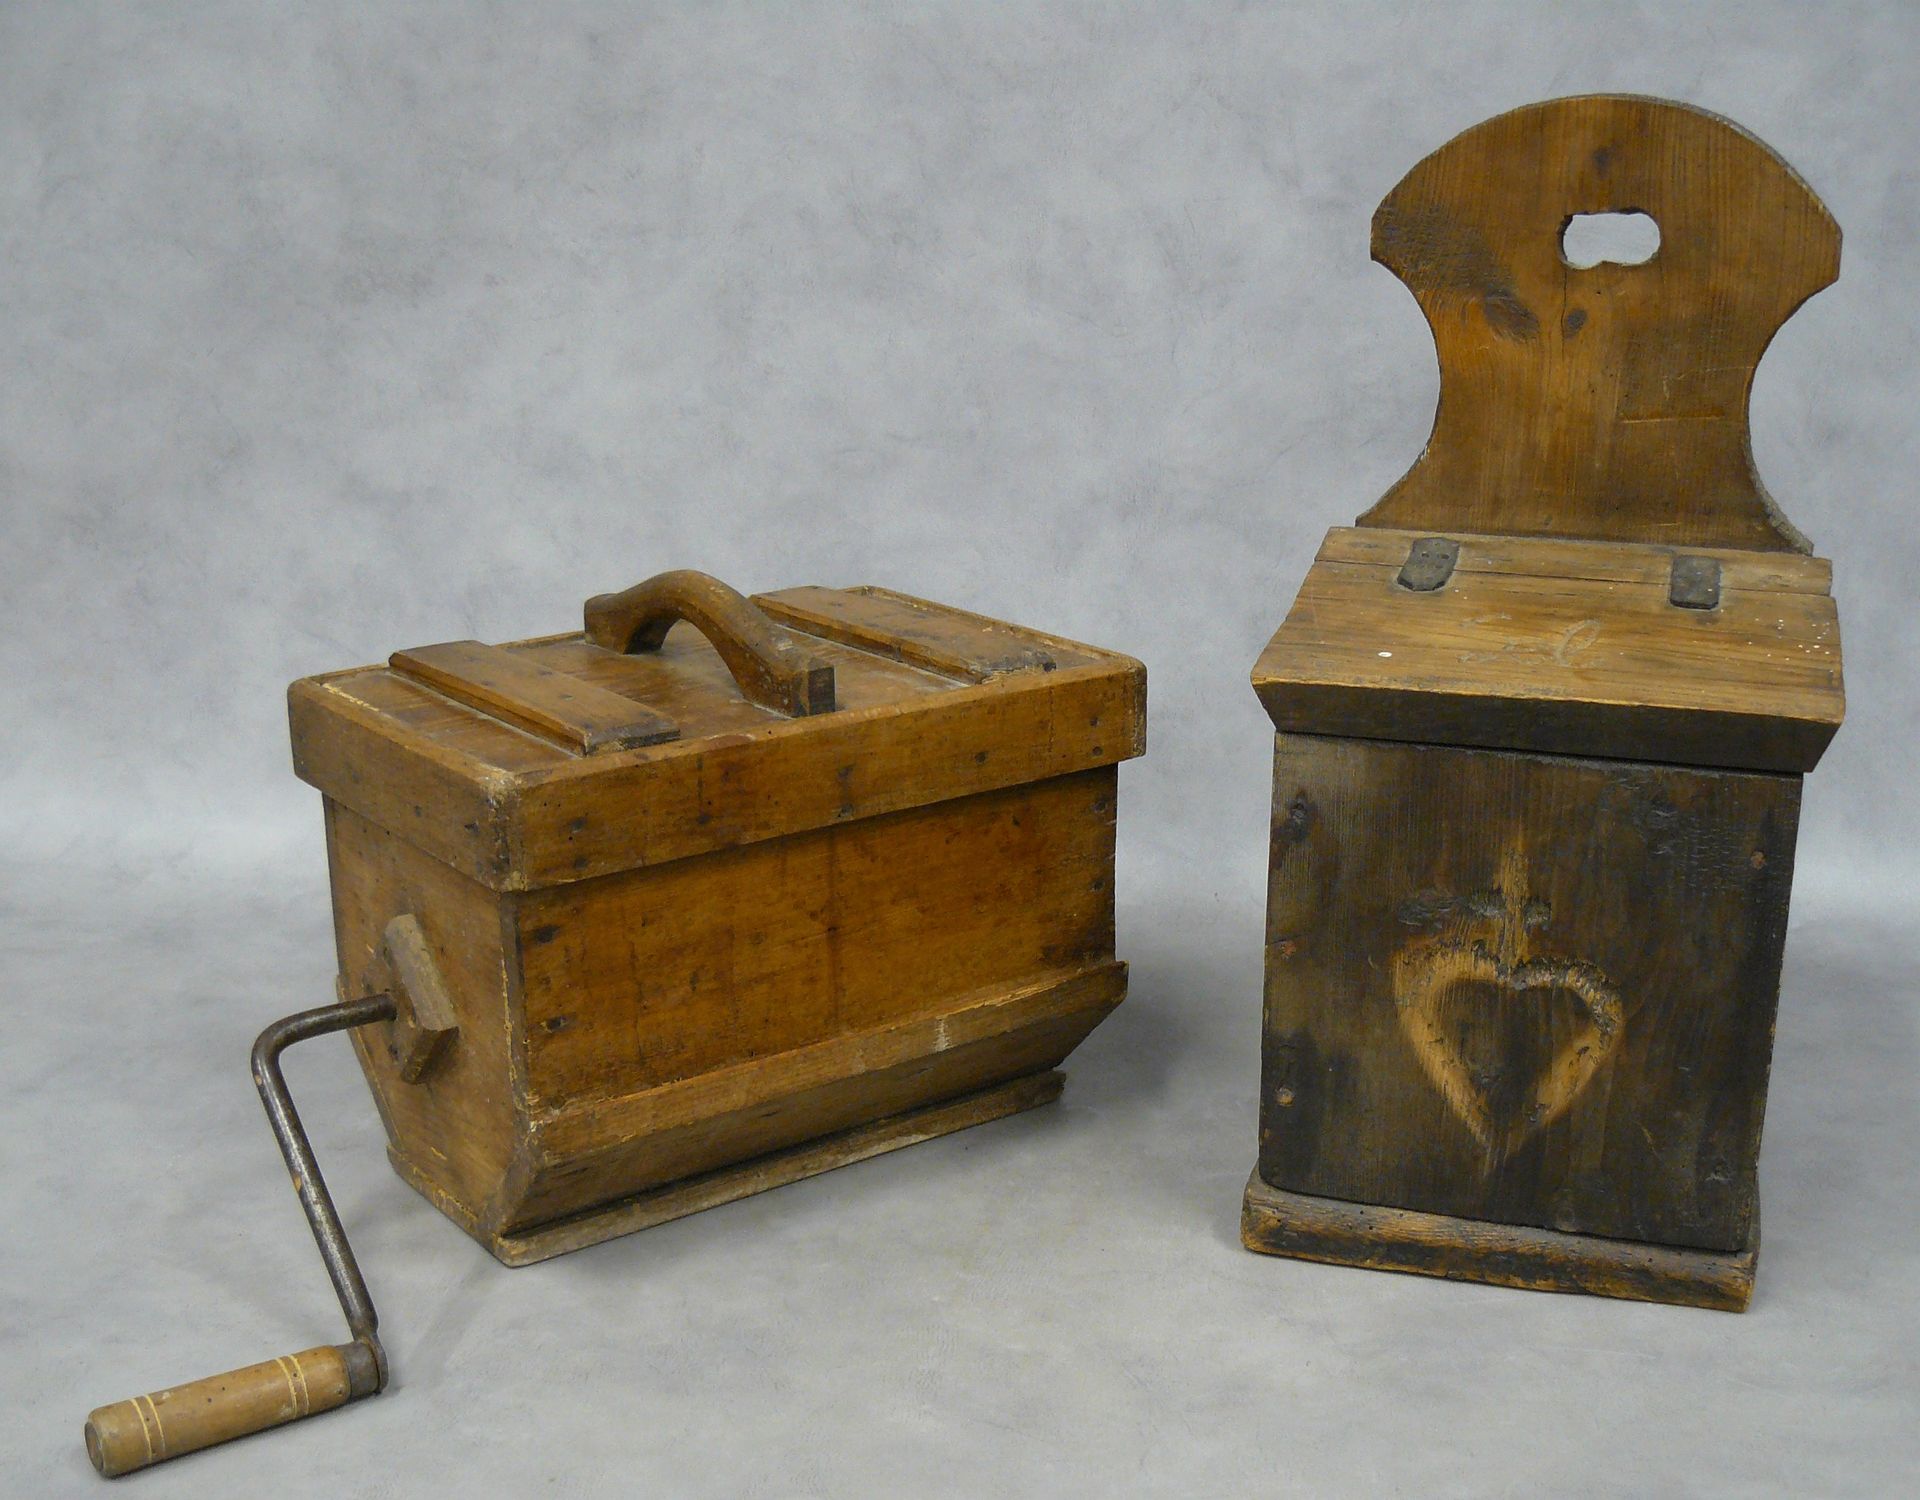 Null a churn with crank - W 54 cm and a rustic salt box - H 51,5 cm